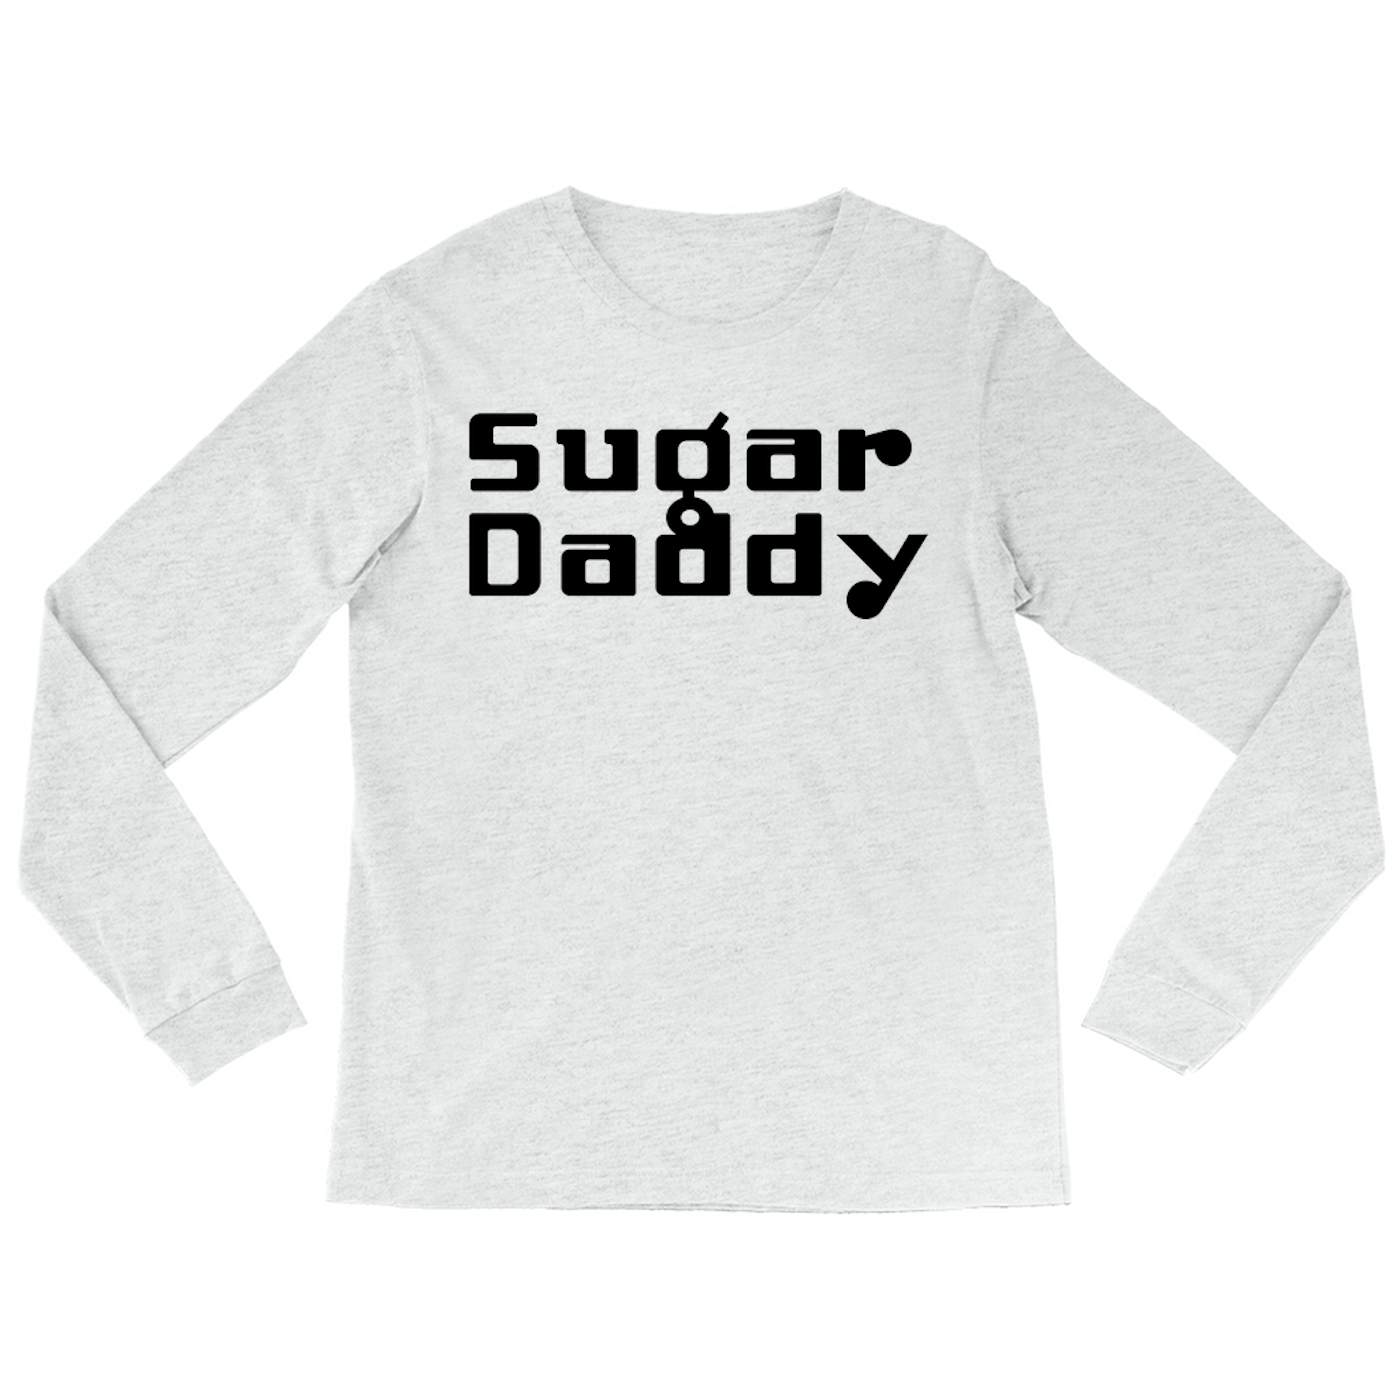 Ramones Long Sleeve Shirt | Sugar Daddy Worn By Dee Dee Ramone Ramones Shirt